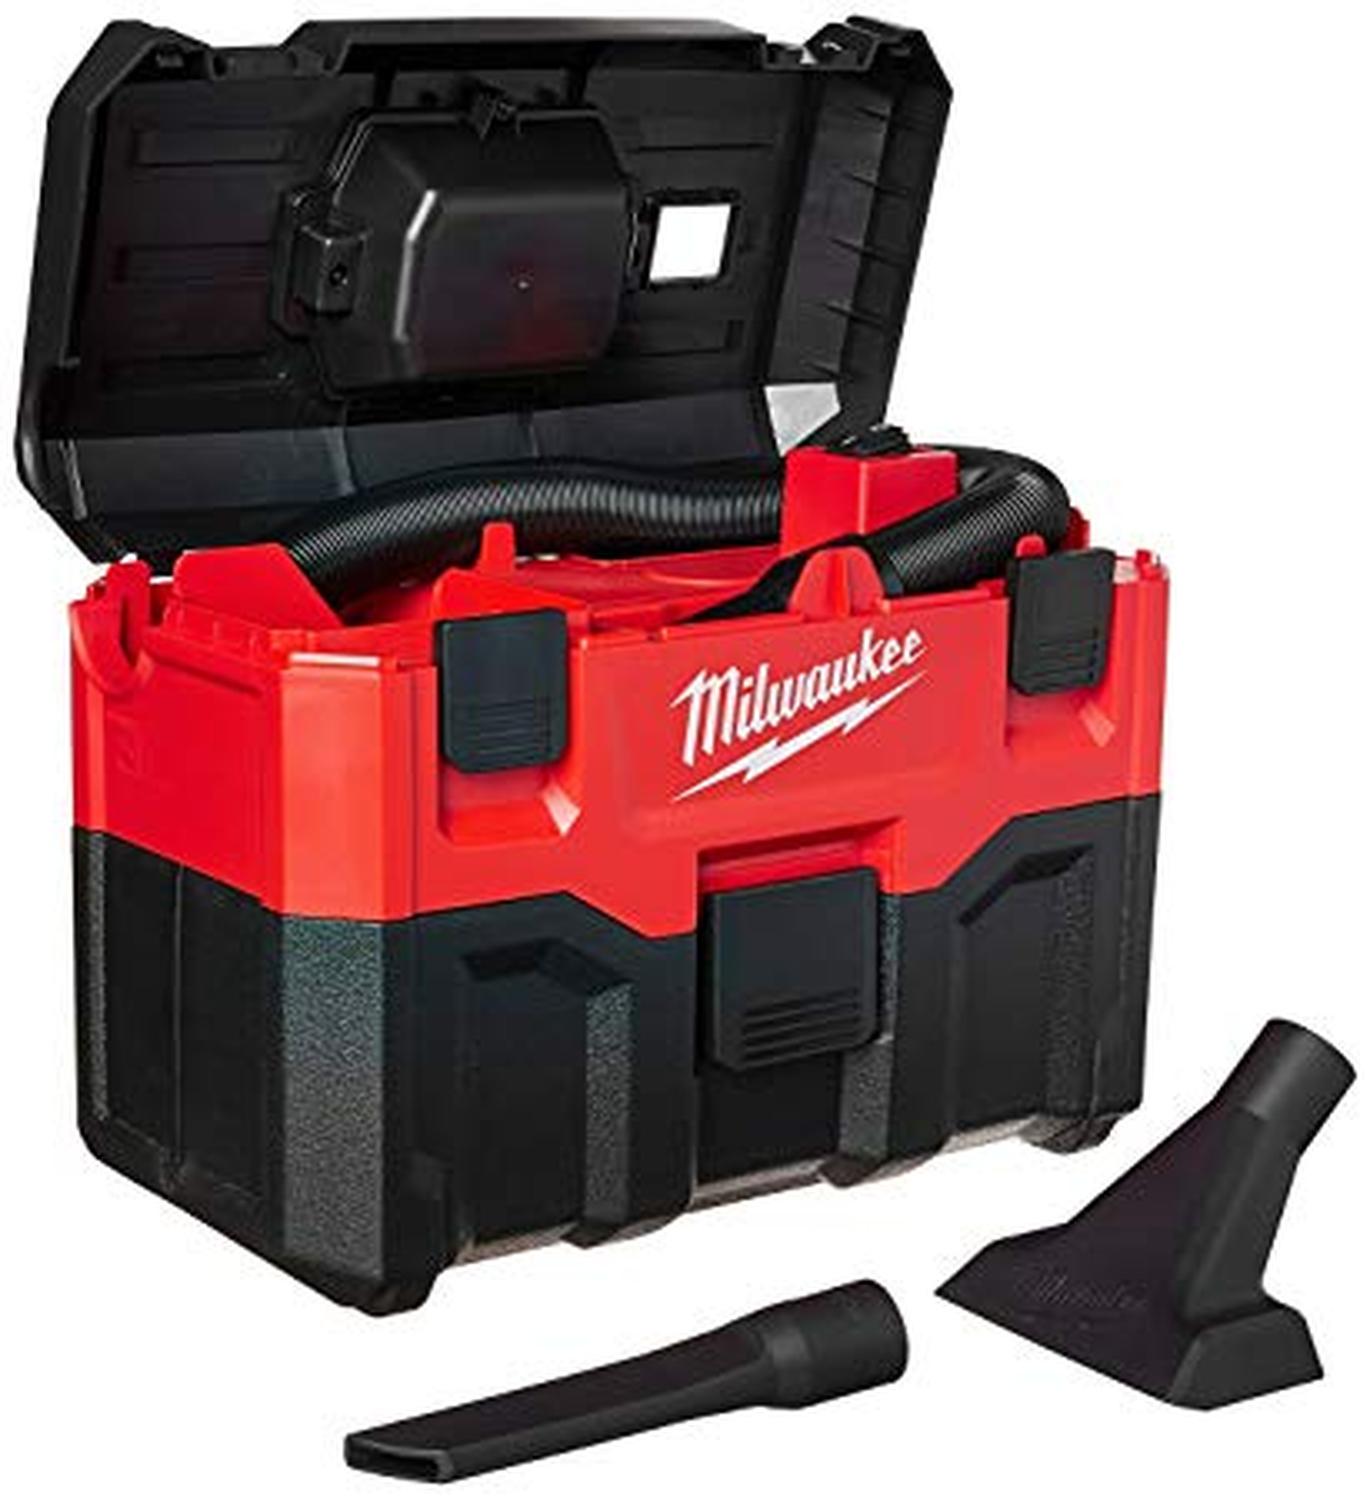 MILWAUKEE 0880-20 Aspiradora seco/humedo M18 sin accesorios